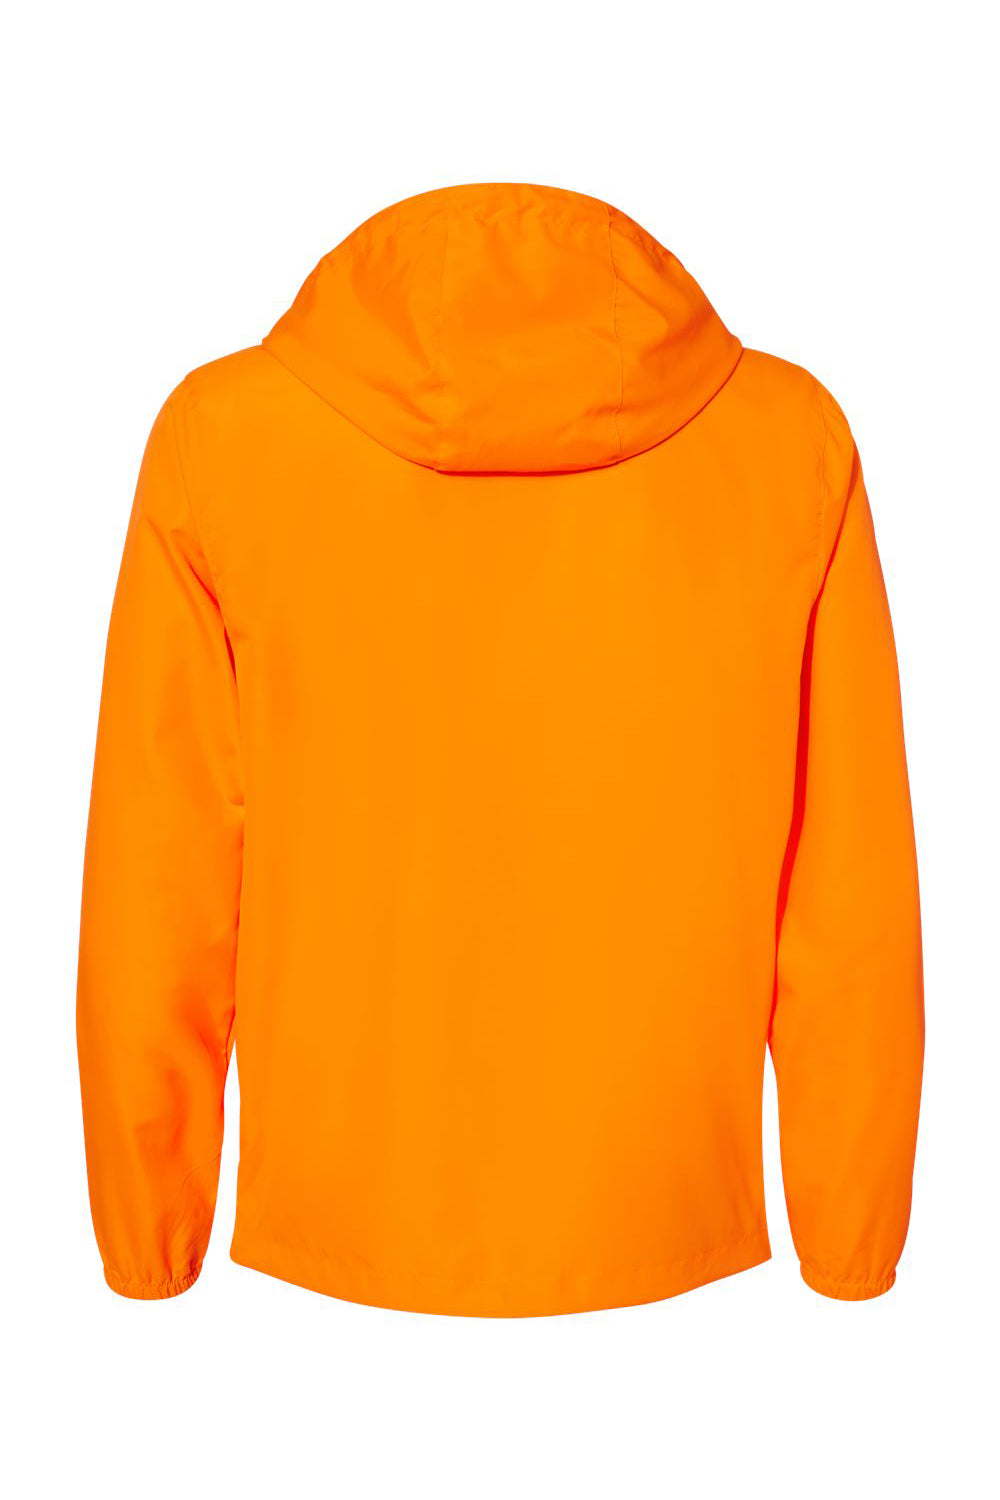 Independent Trading Co. EXP54LWZ Mens Full Zip Windbreaker Hooded Jacket Safety Orange Flat Back